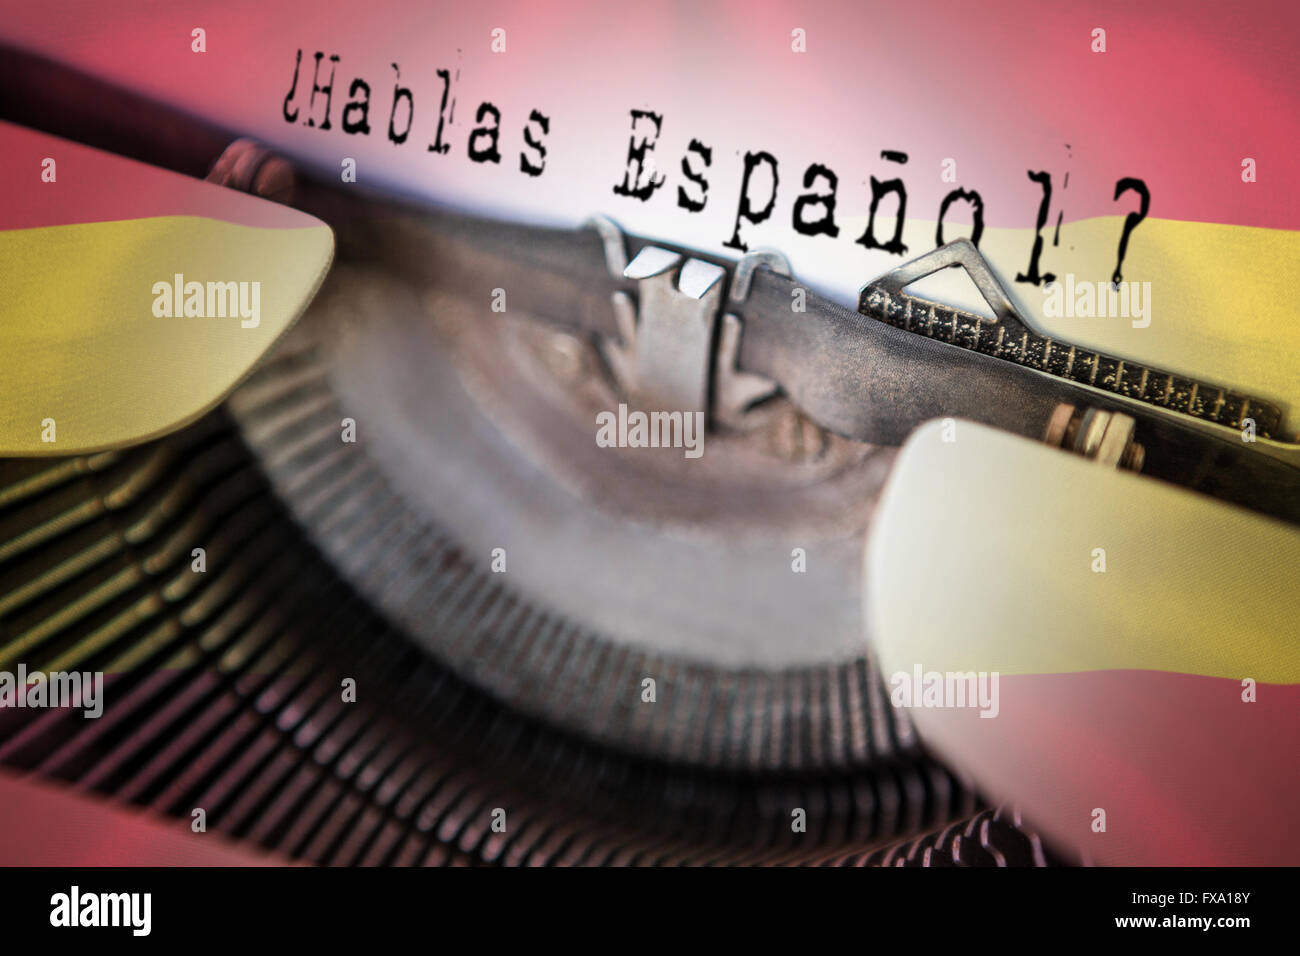 Question Hablas Espanol Do You Speak Spanish Stock Photo